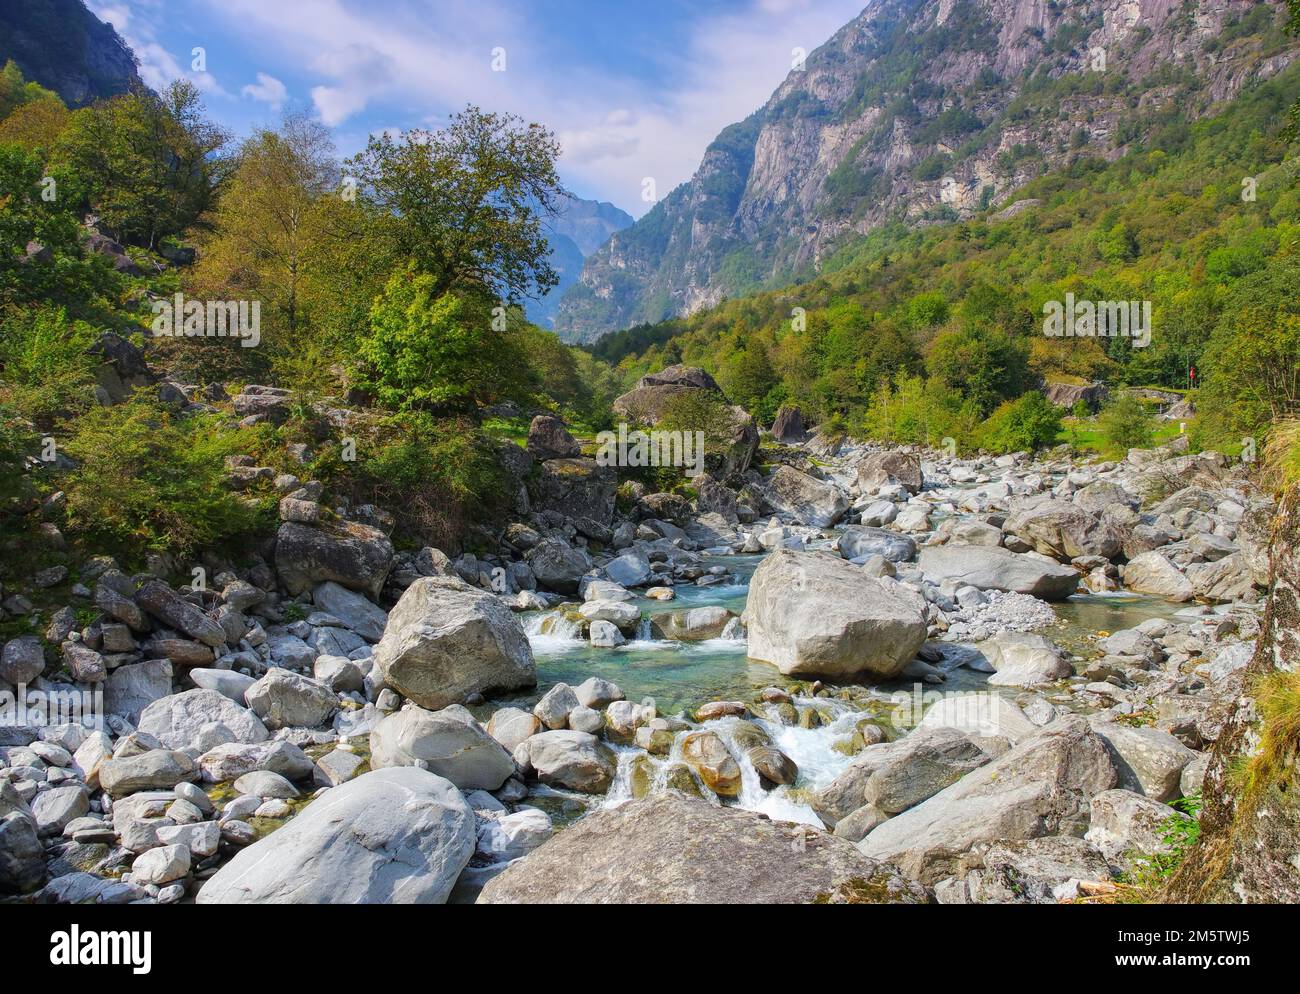 typical rocks in river Bavona in the Bavona Valley, Ticino in Switzerland, Europe Stock Photo